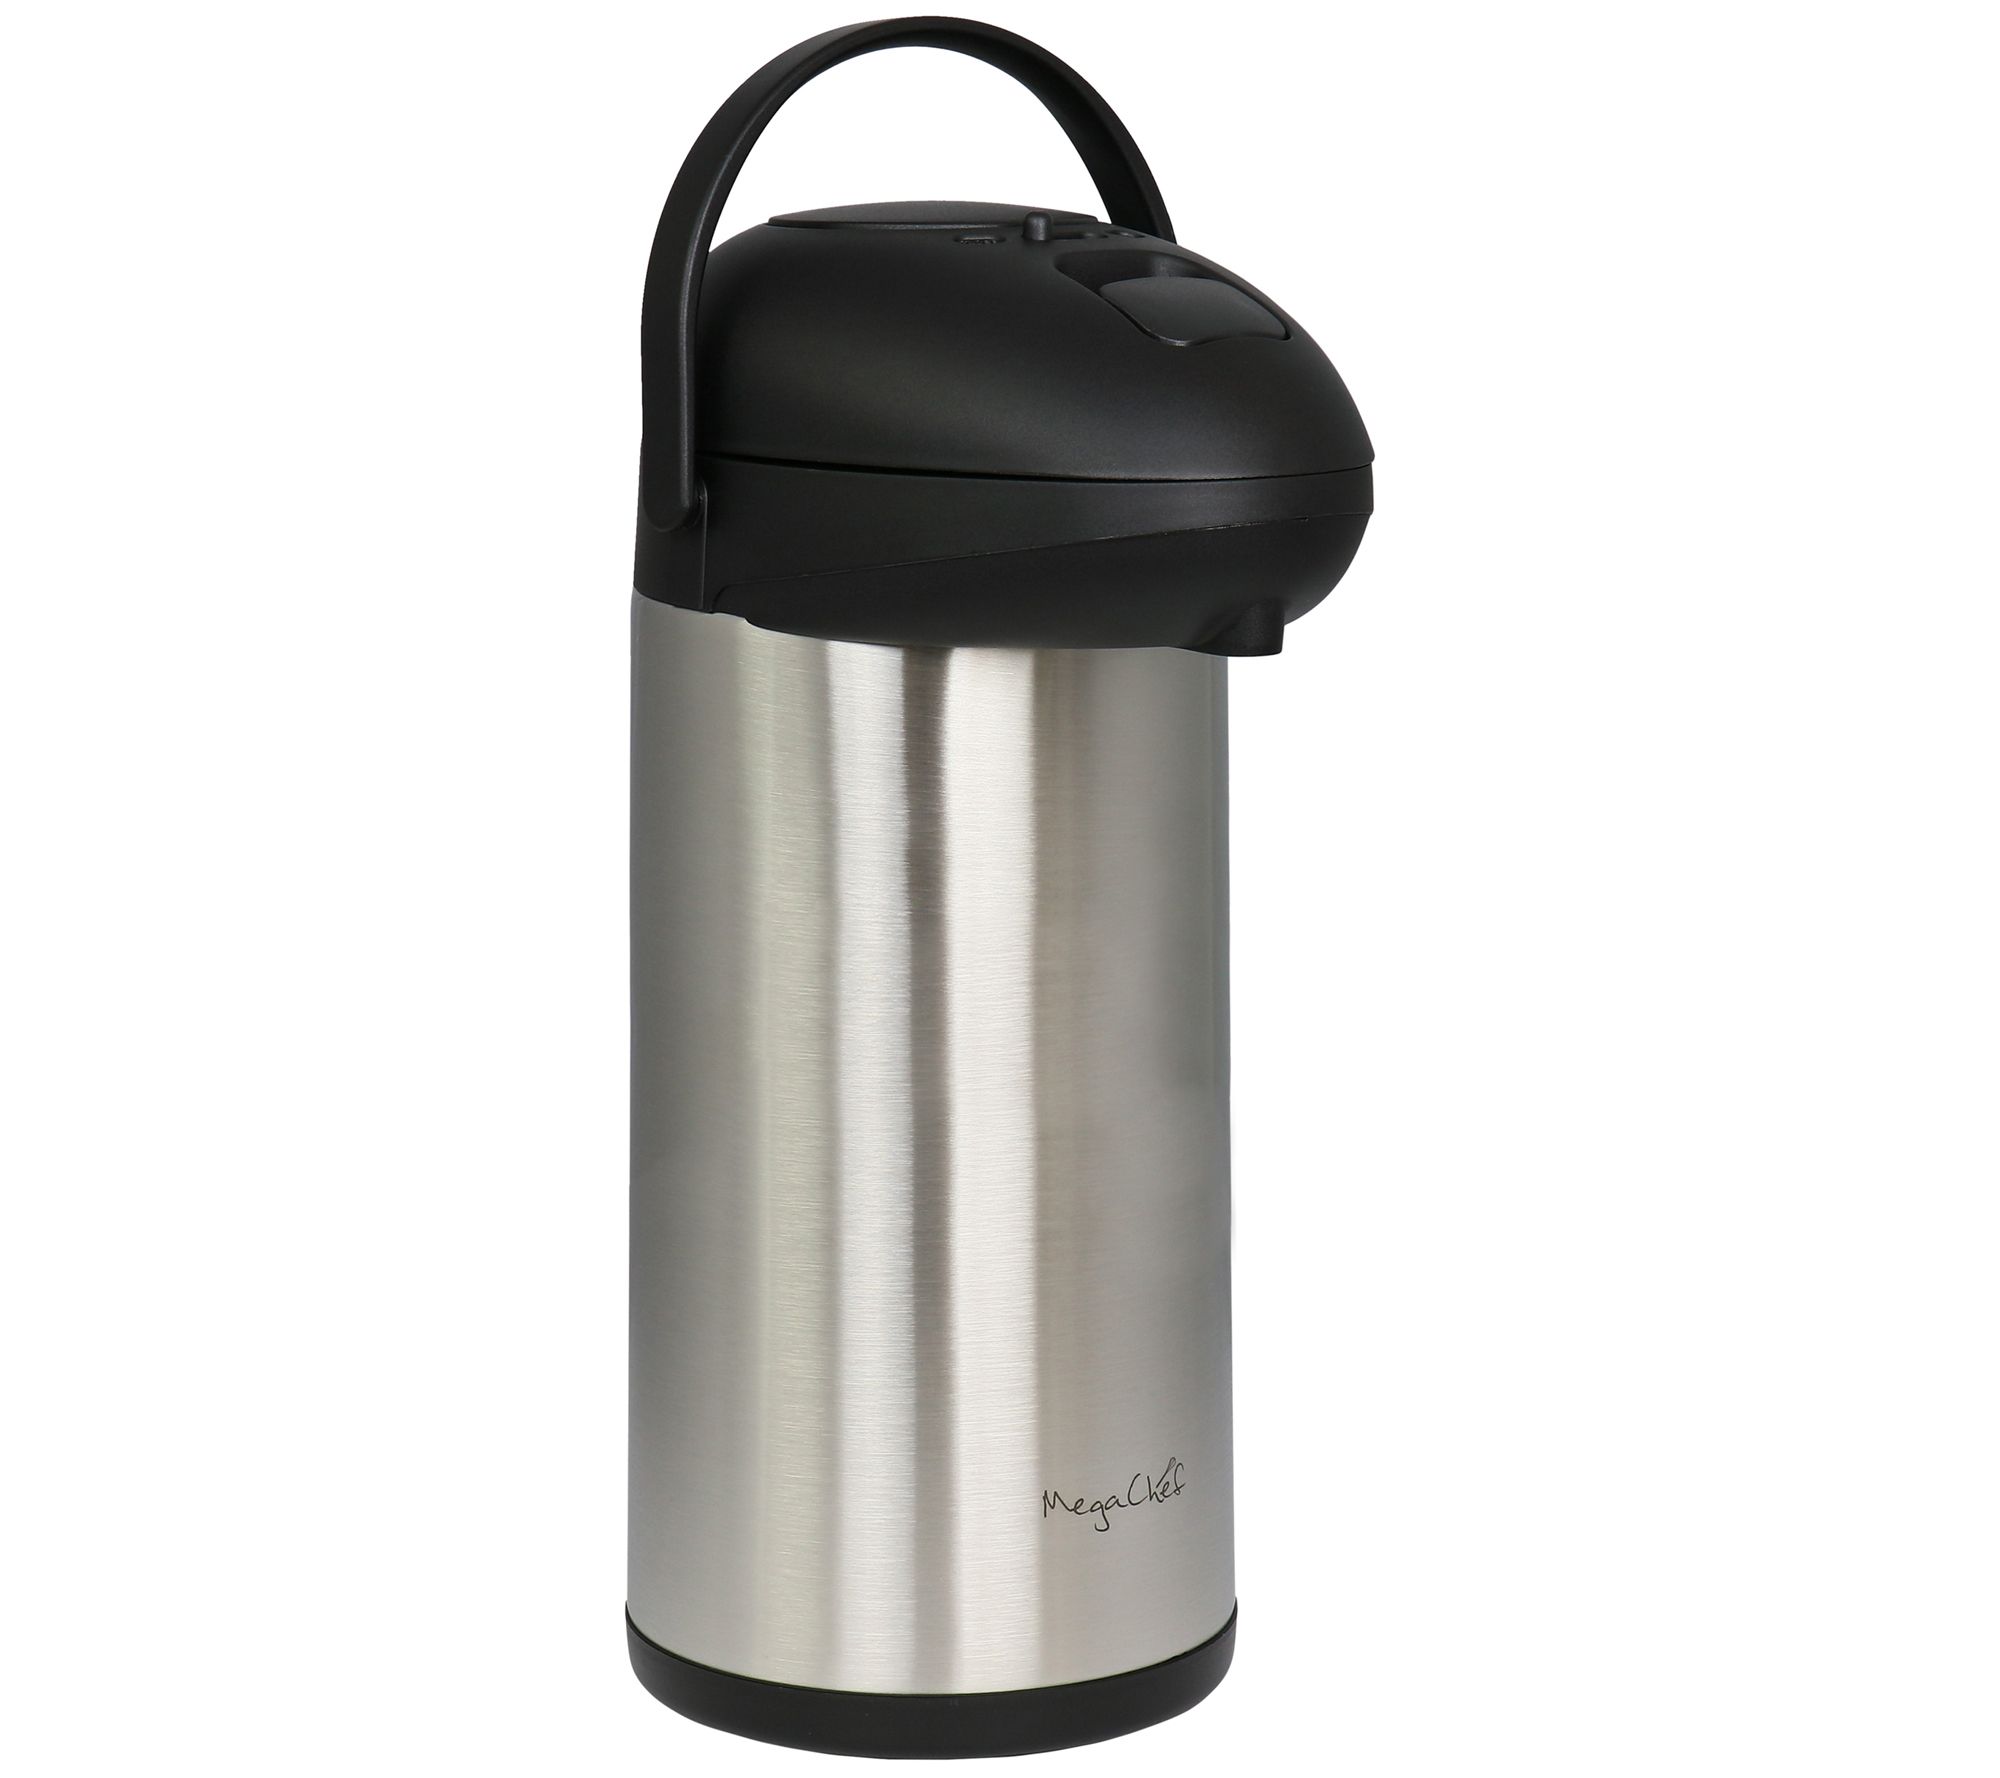 100% Genuine! THERMOS Vacuum Insulated 2qt Pump Pot - hot coffee